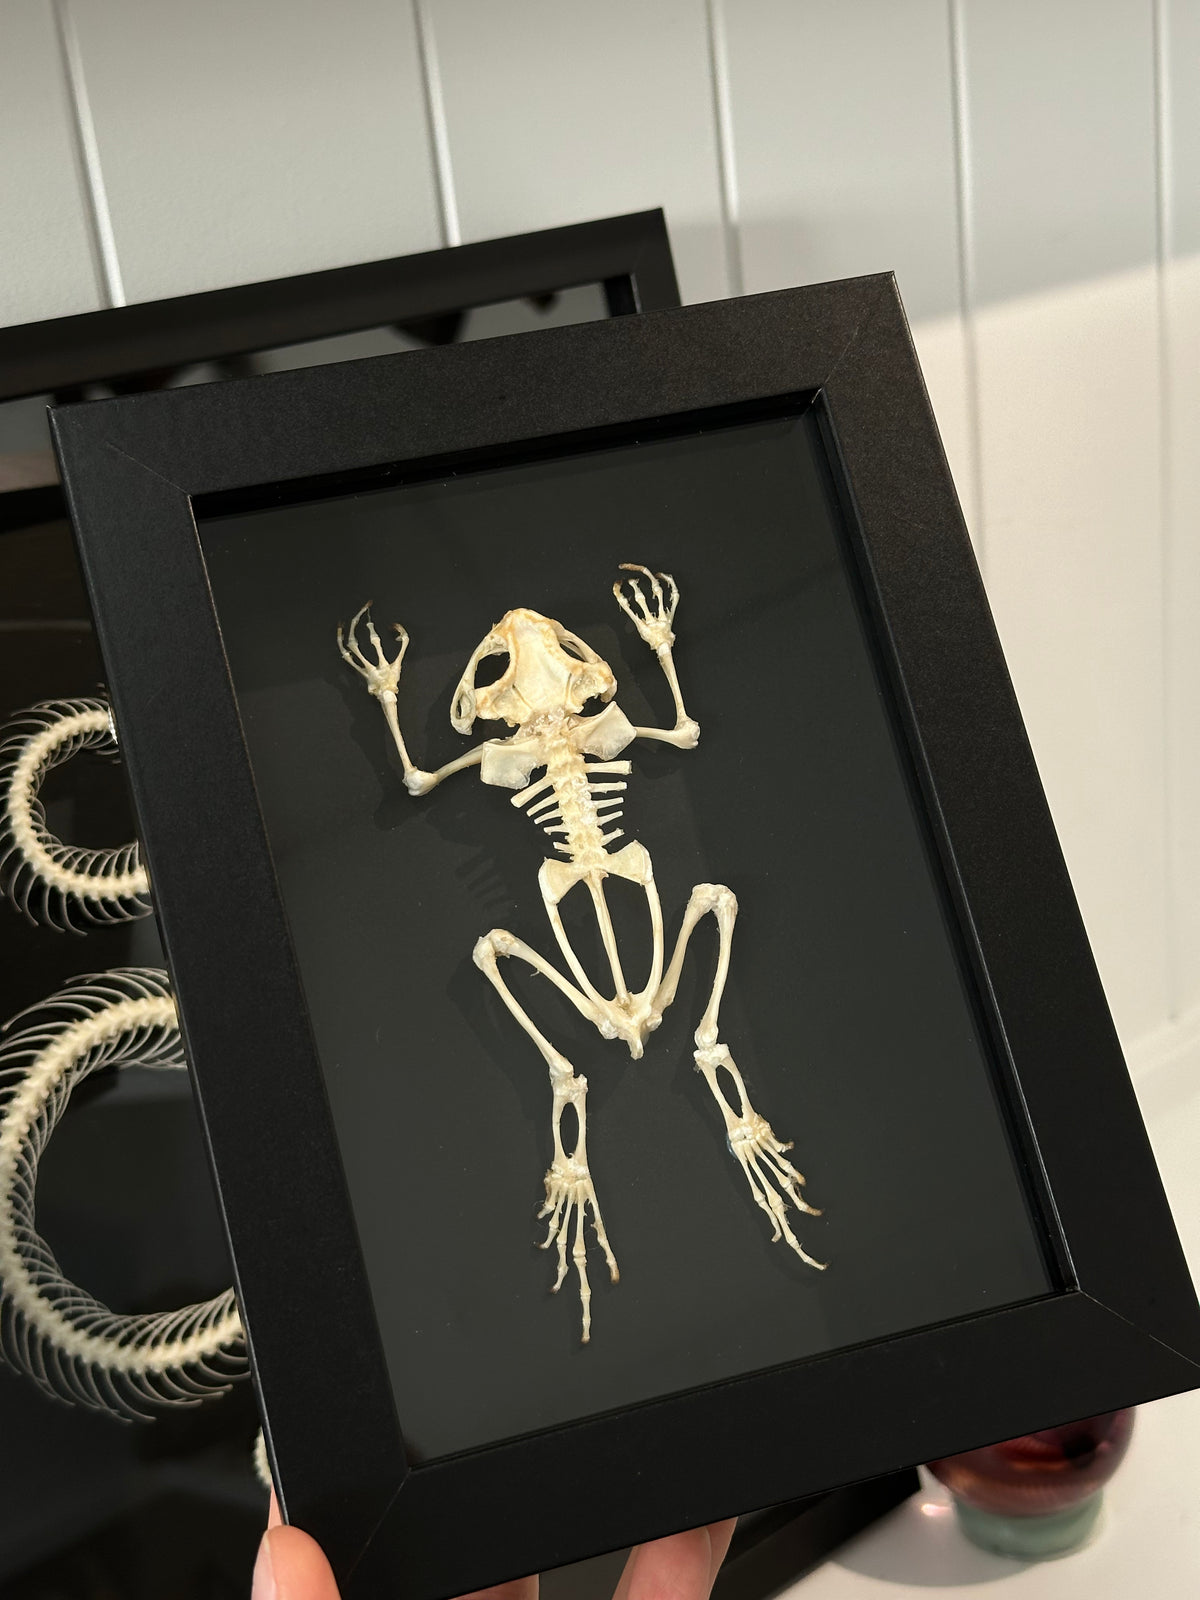 Small Frog Skeleton / Duttaphrynus Melanostictus in a frame